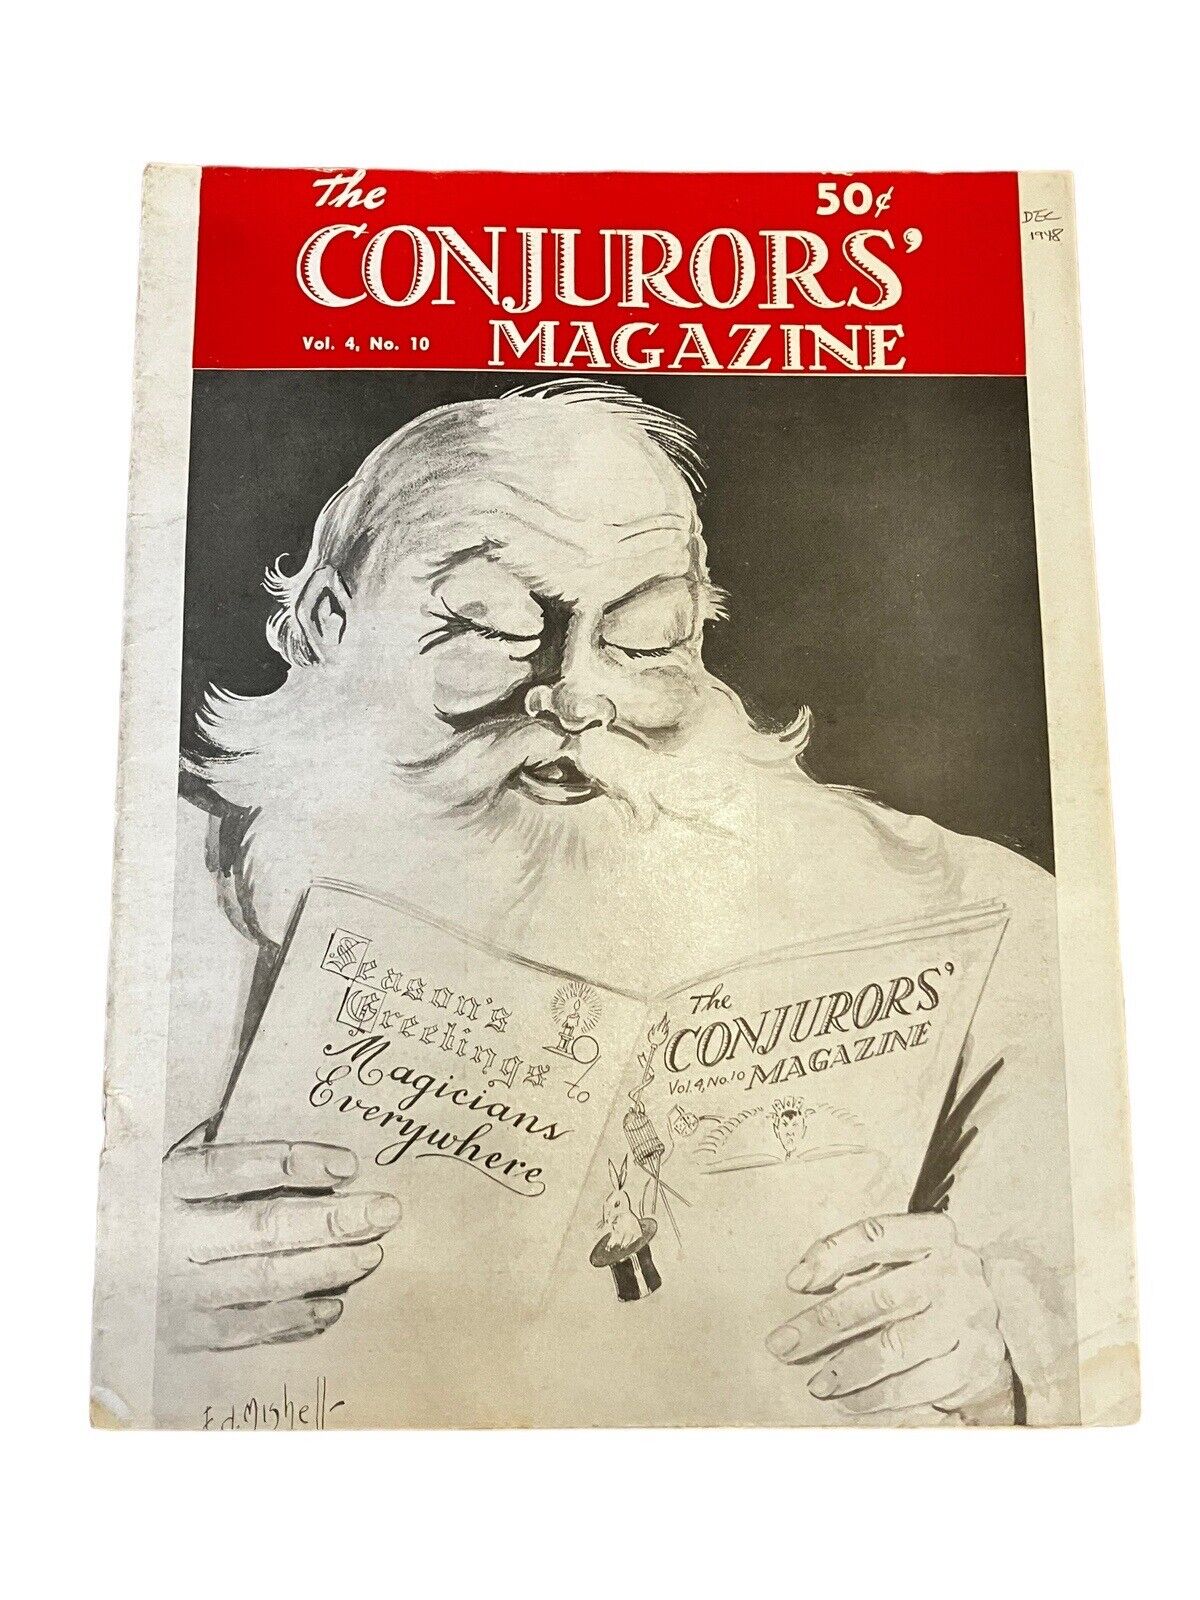 The Conjurors\' Magazine Vol. 4 No. 10 Seasons Greetings Dec 1948 Magician VTG